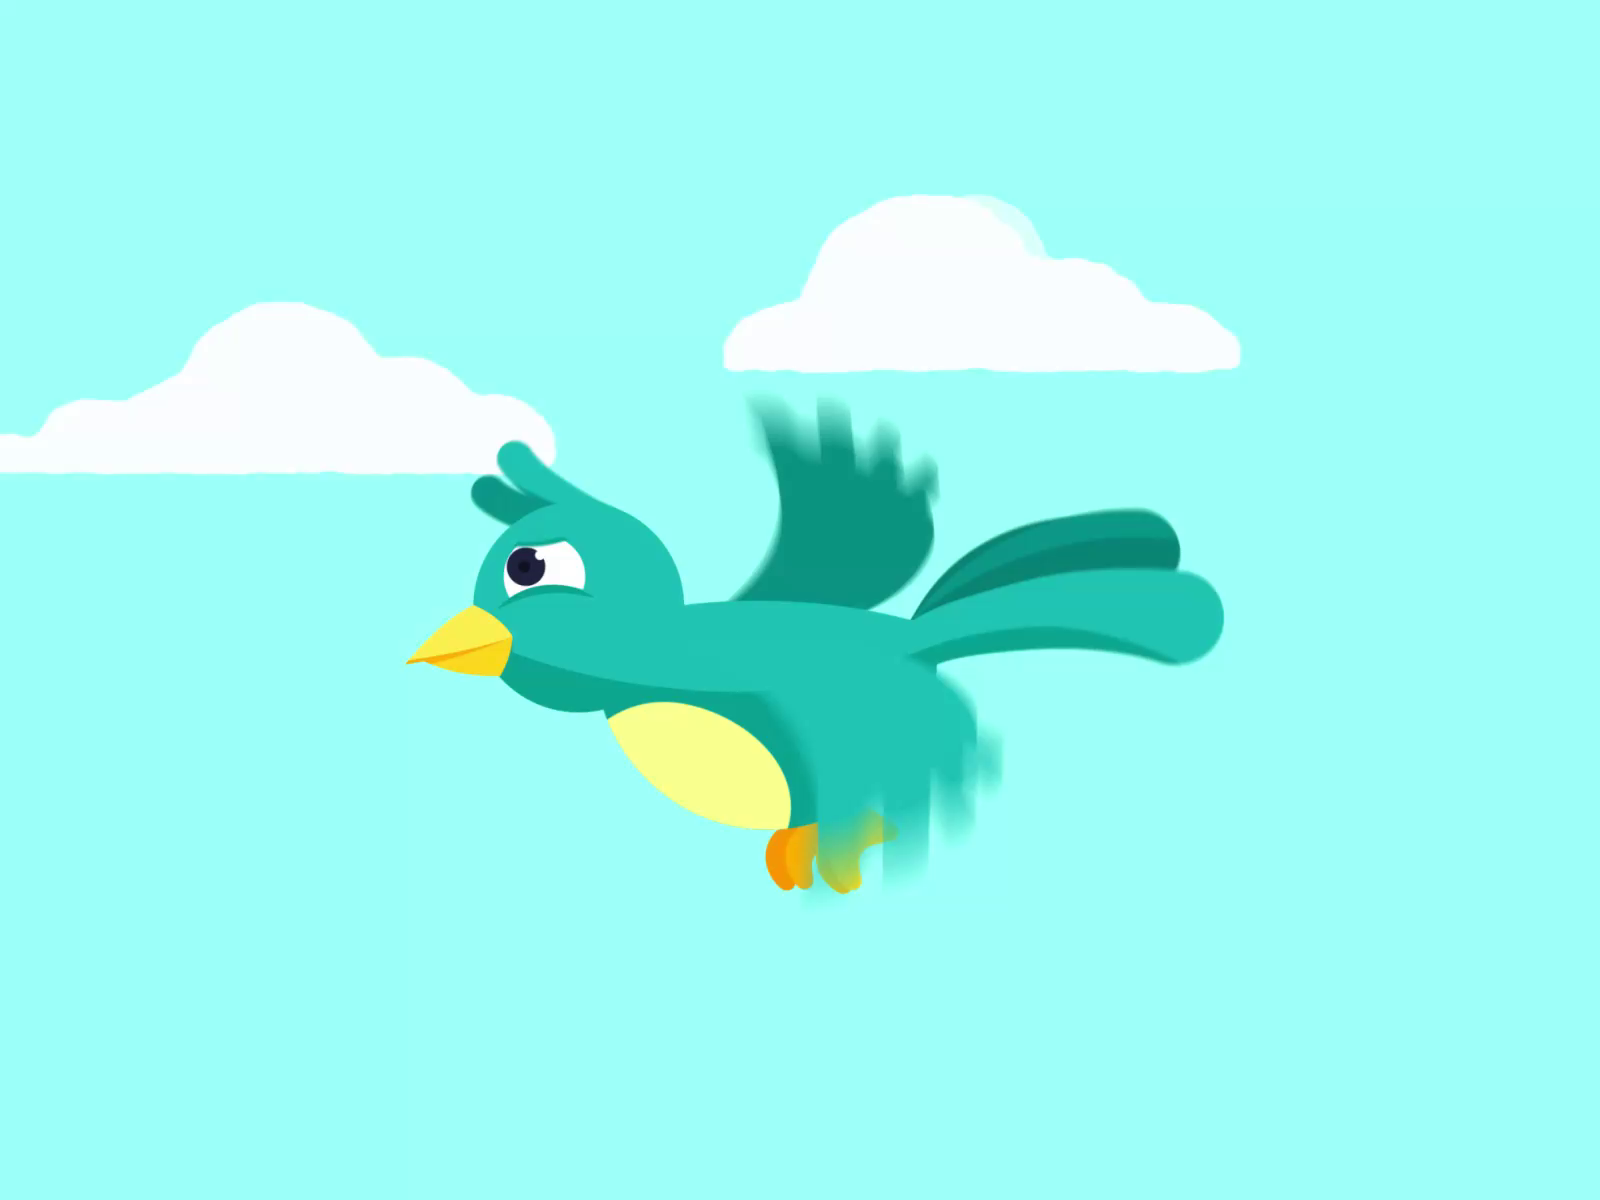 Bird Flying Animation by Purple Pie Studios on Dribbble